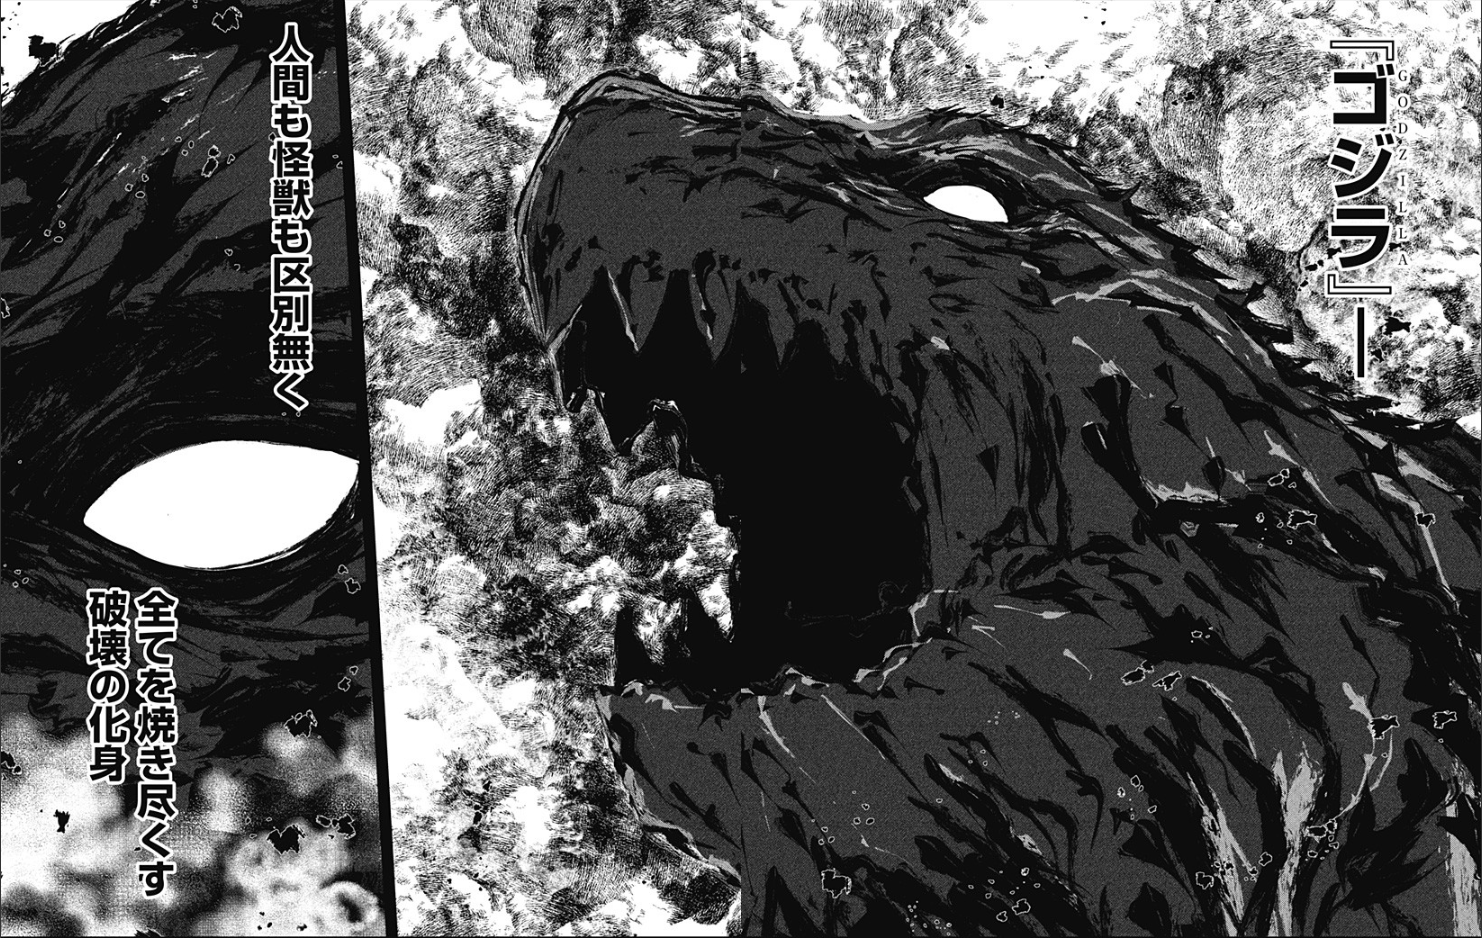 Random Book 3 - Godzilla Earth vs Other Godzilla (Height Chart